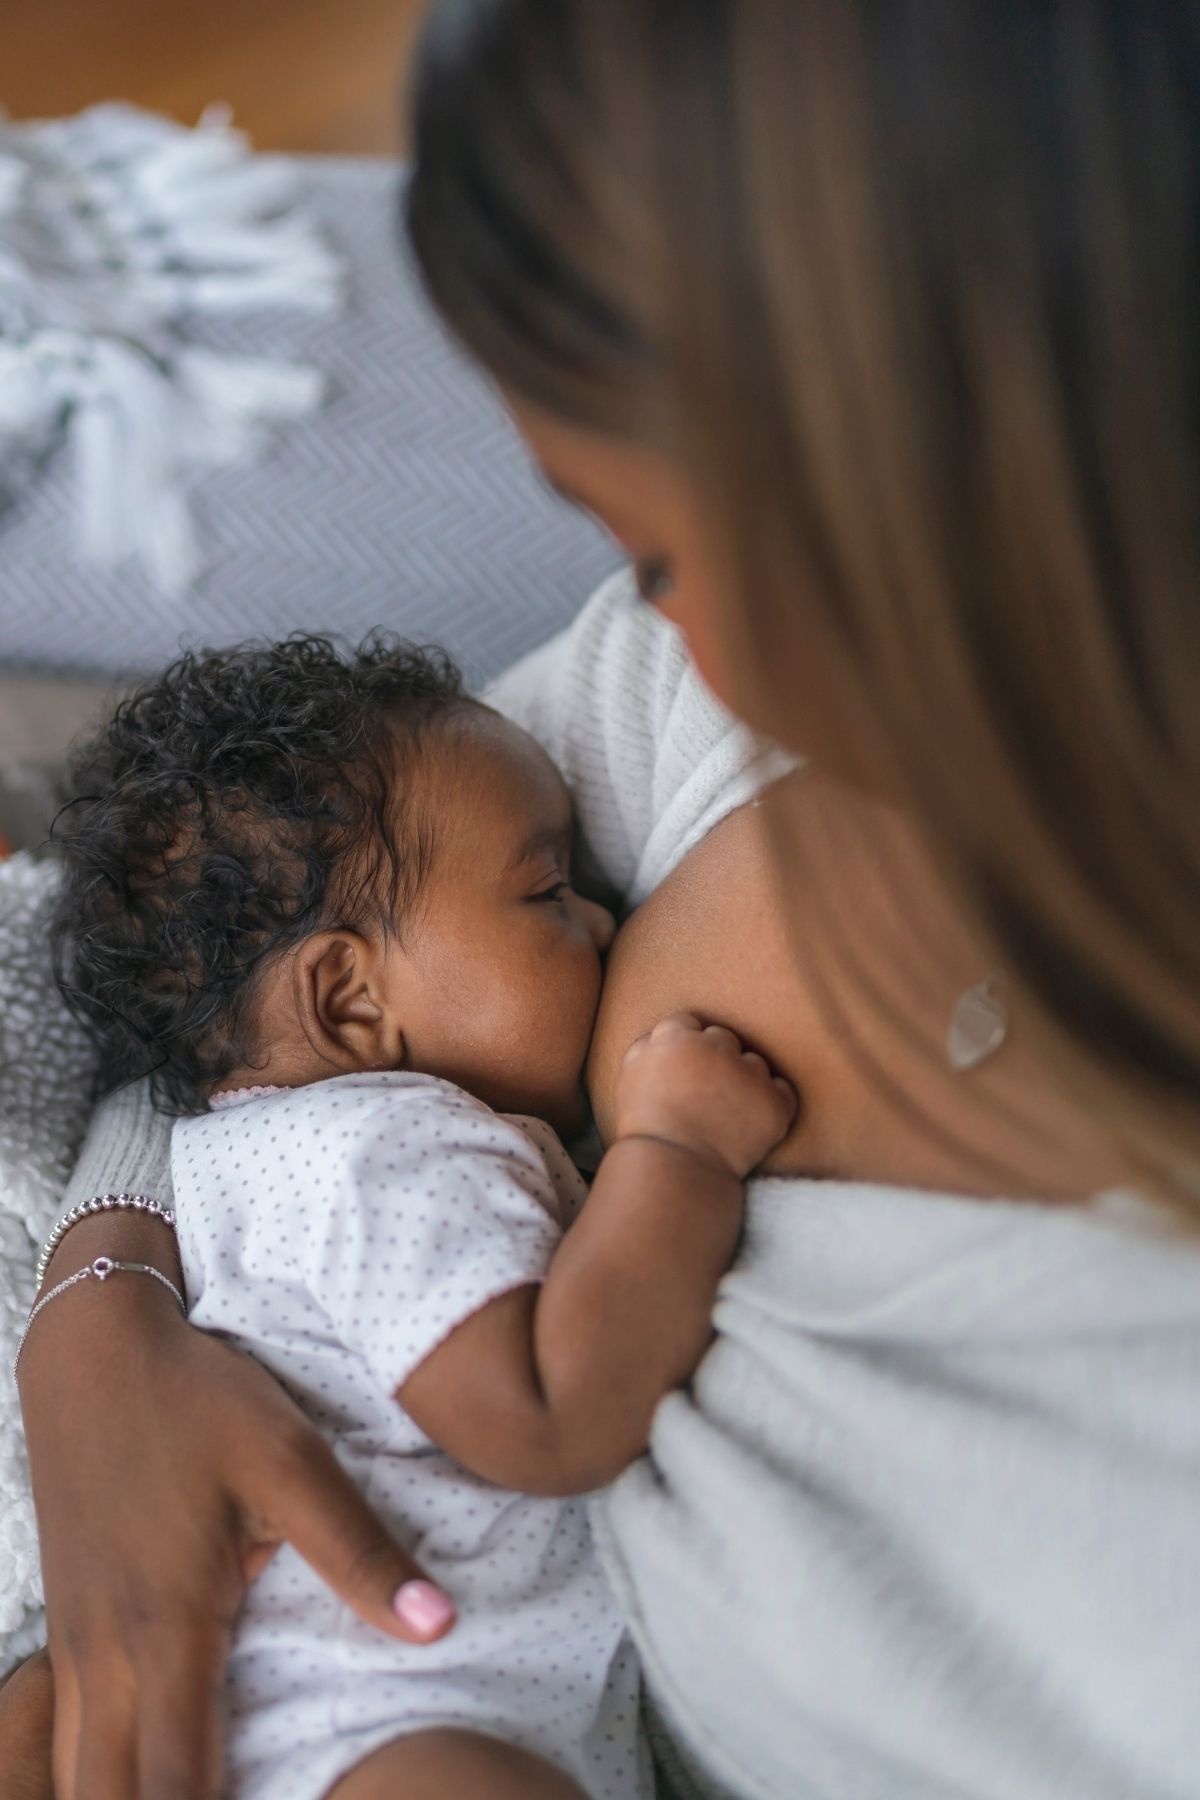 New mom breastfeeding baby girl on regular schedule to optimally refill breast milk supply.